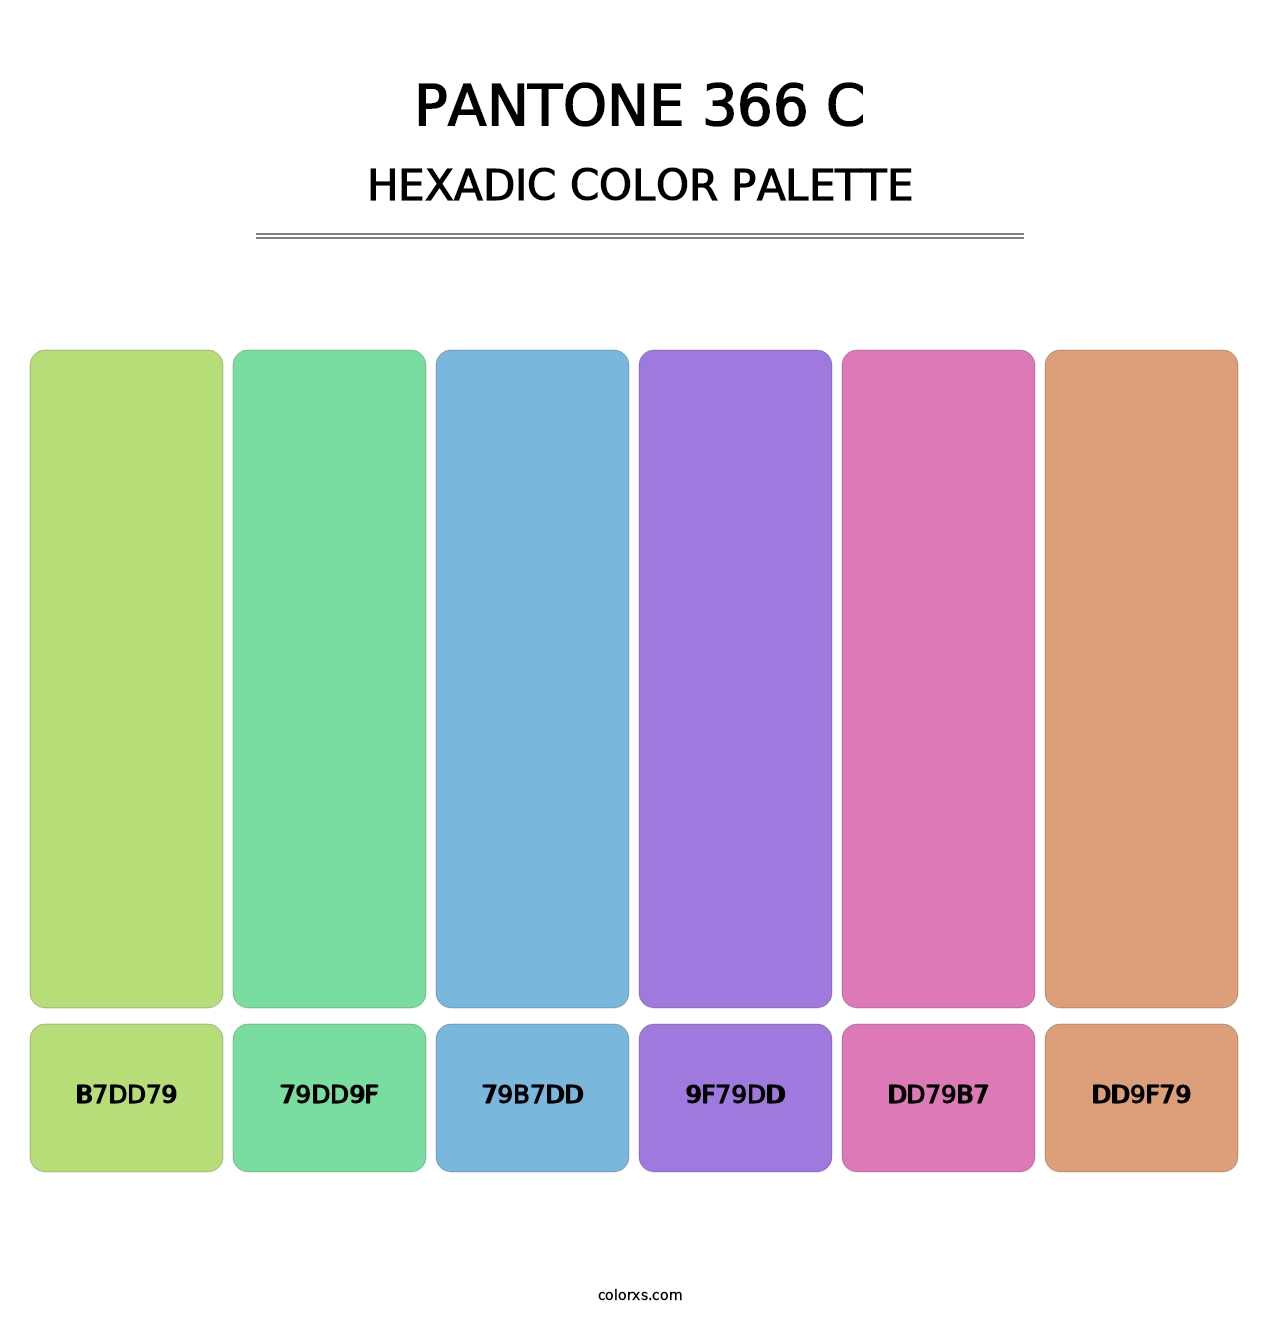 PANTONE 366 C - Hexadic Color Palette